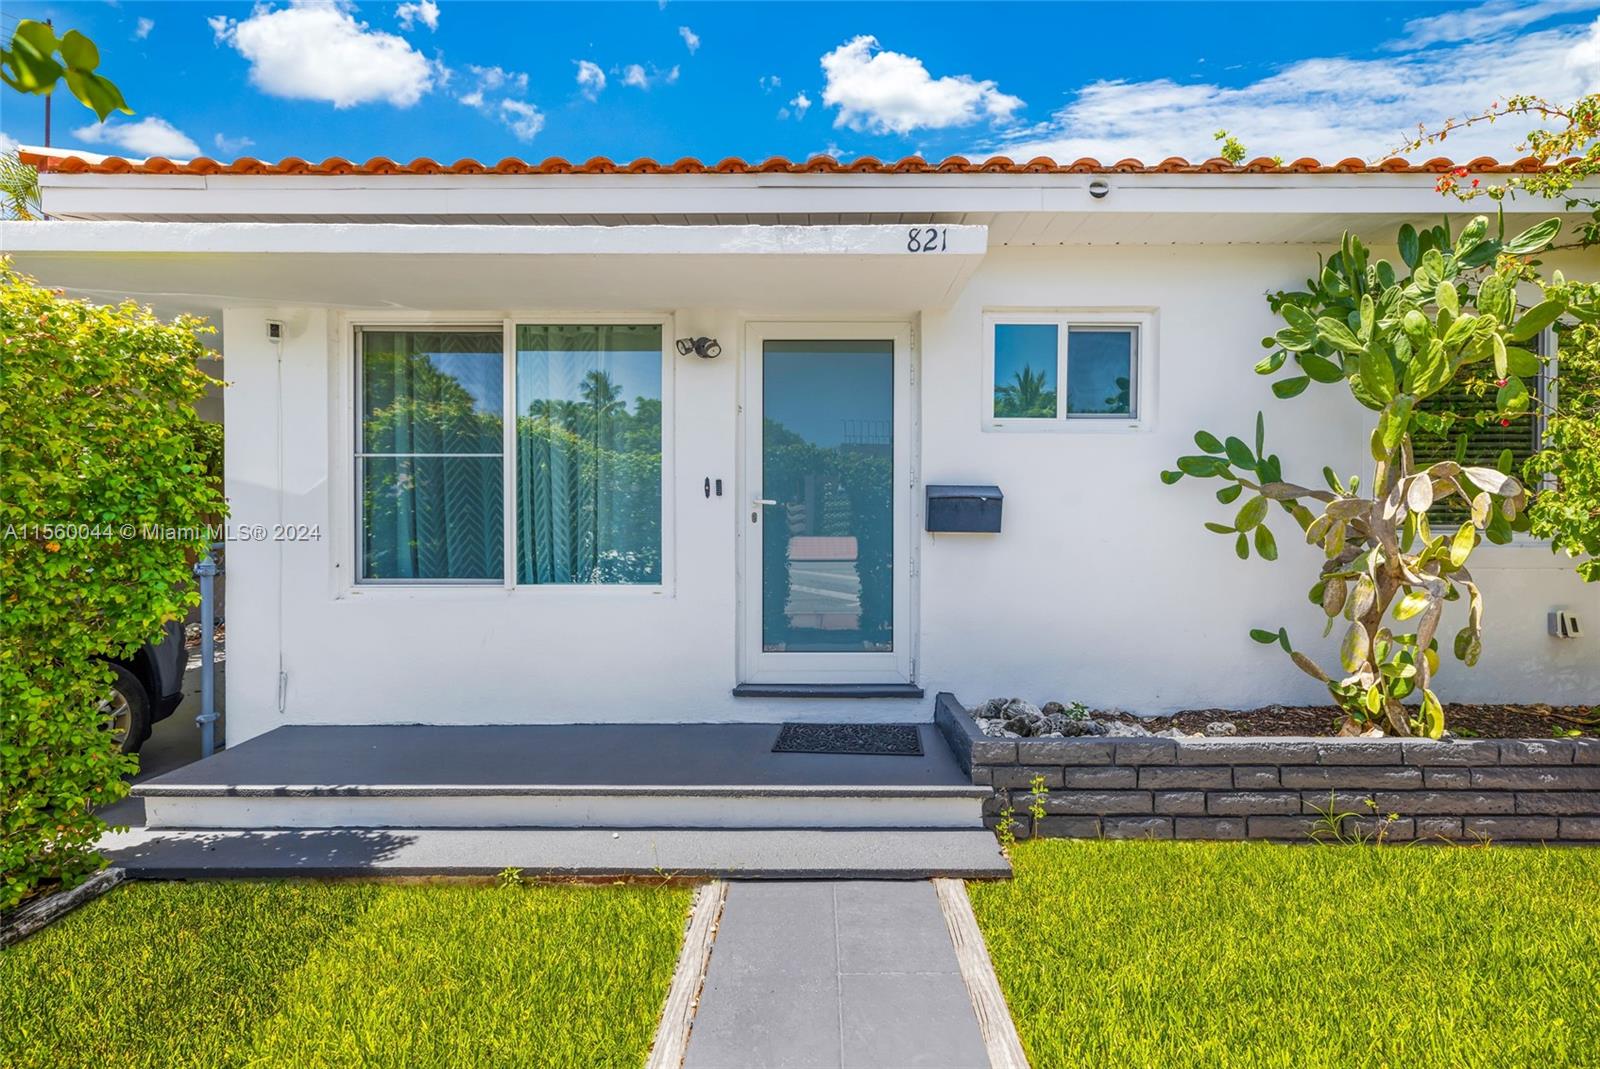 Rental Property at 821 84th St, Miami Beach, Miami-Dade County, Florida - Bedrooms: 3 
Bathrooms: 2  - $5,500 MO.